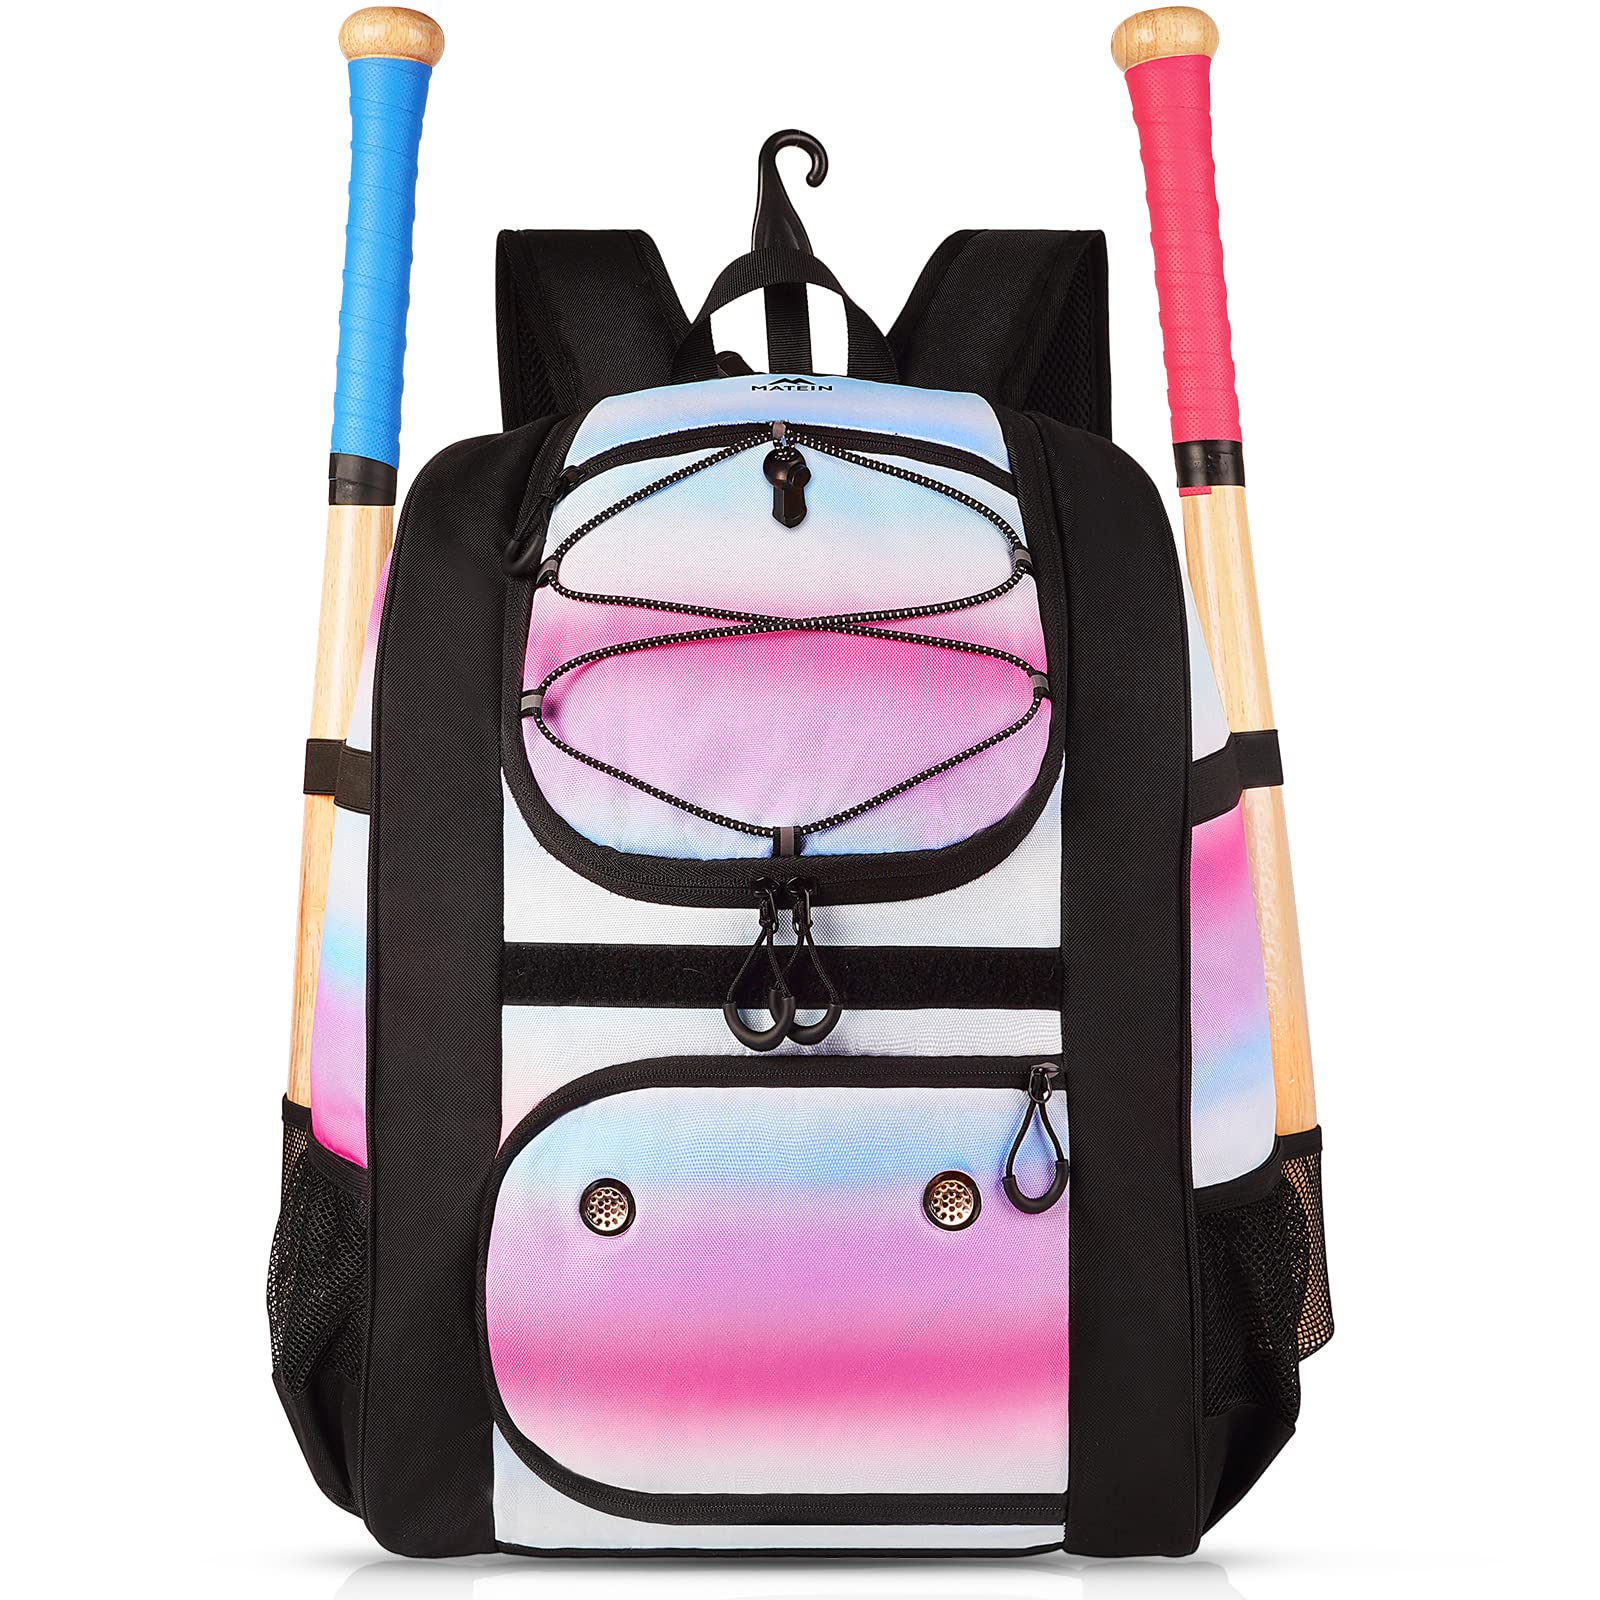 Amazon.com : oscaurt Baseball Softball Bag - Baseball Bat Backpack Adult  Shoe Bag Tball Bag with Fence Hook and Helmets Shoes Compartment : Sports &  Outdoors